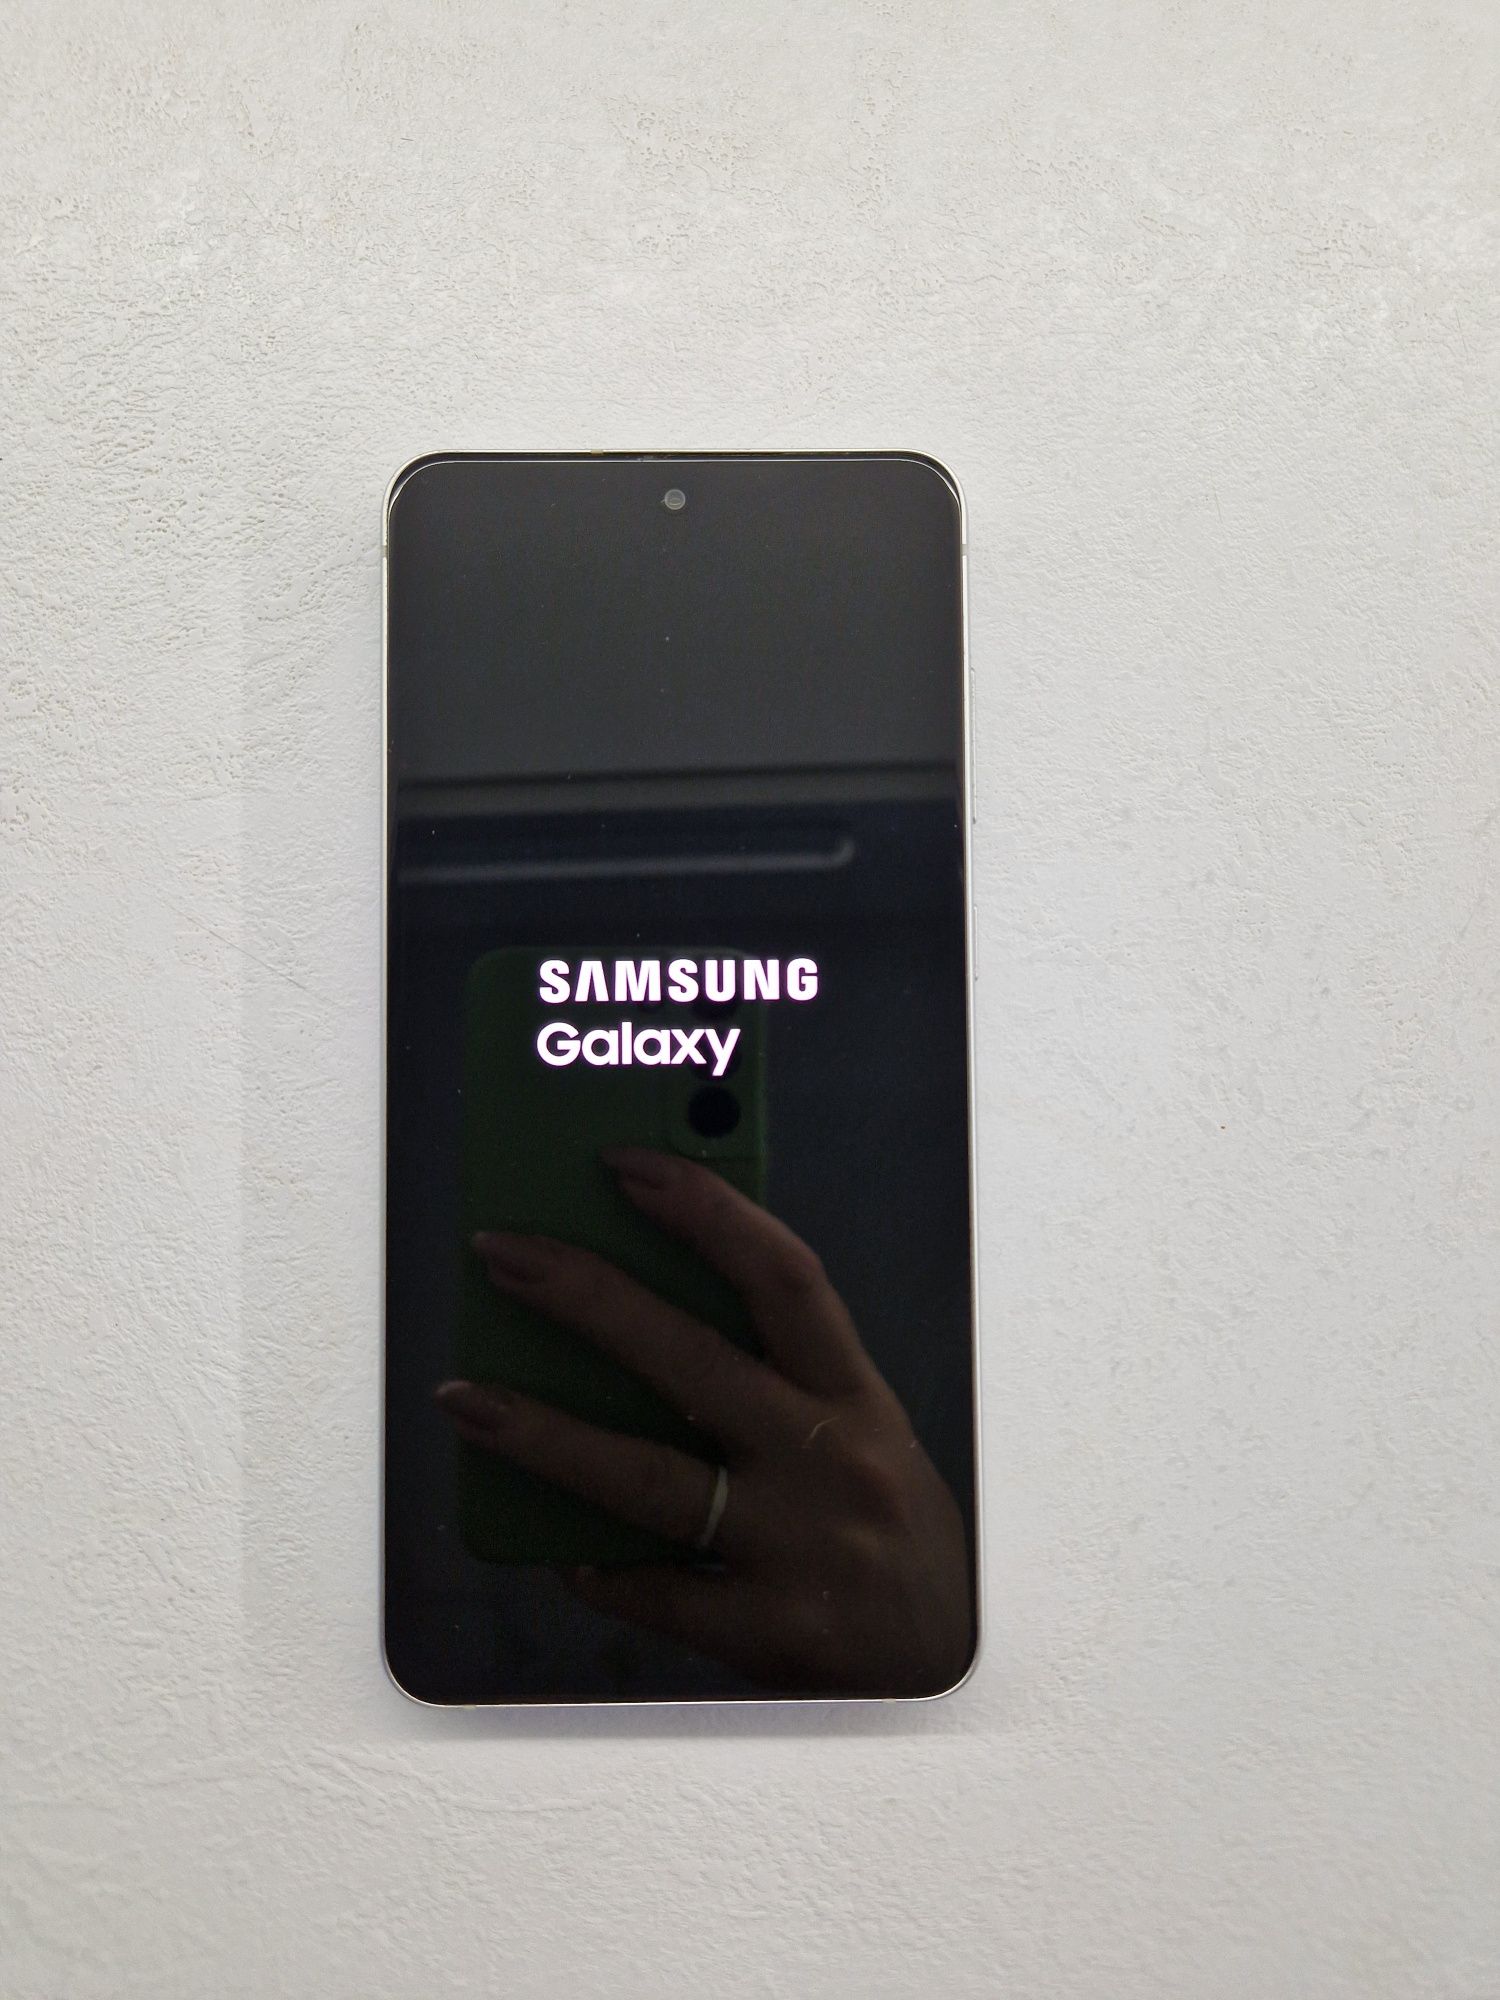 Теоефон Samsung S21 fe